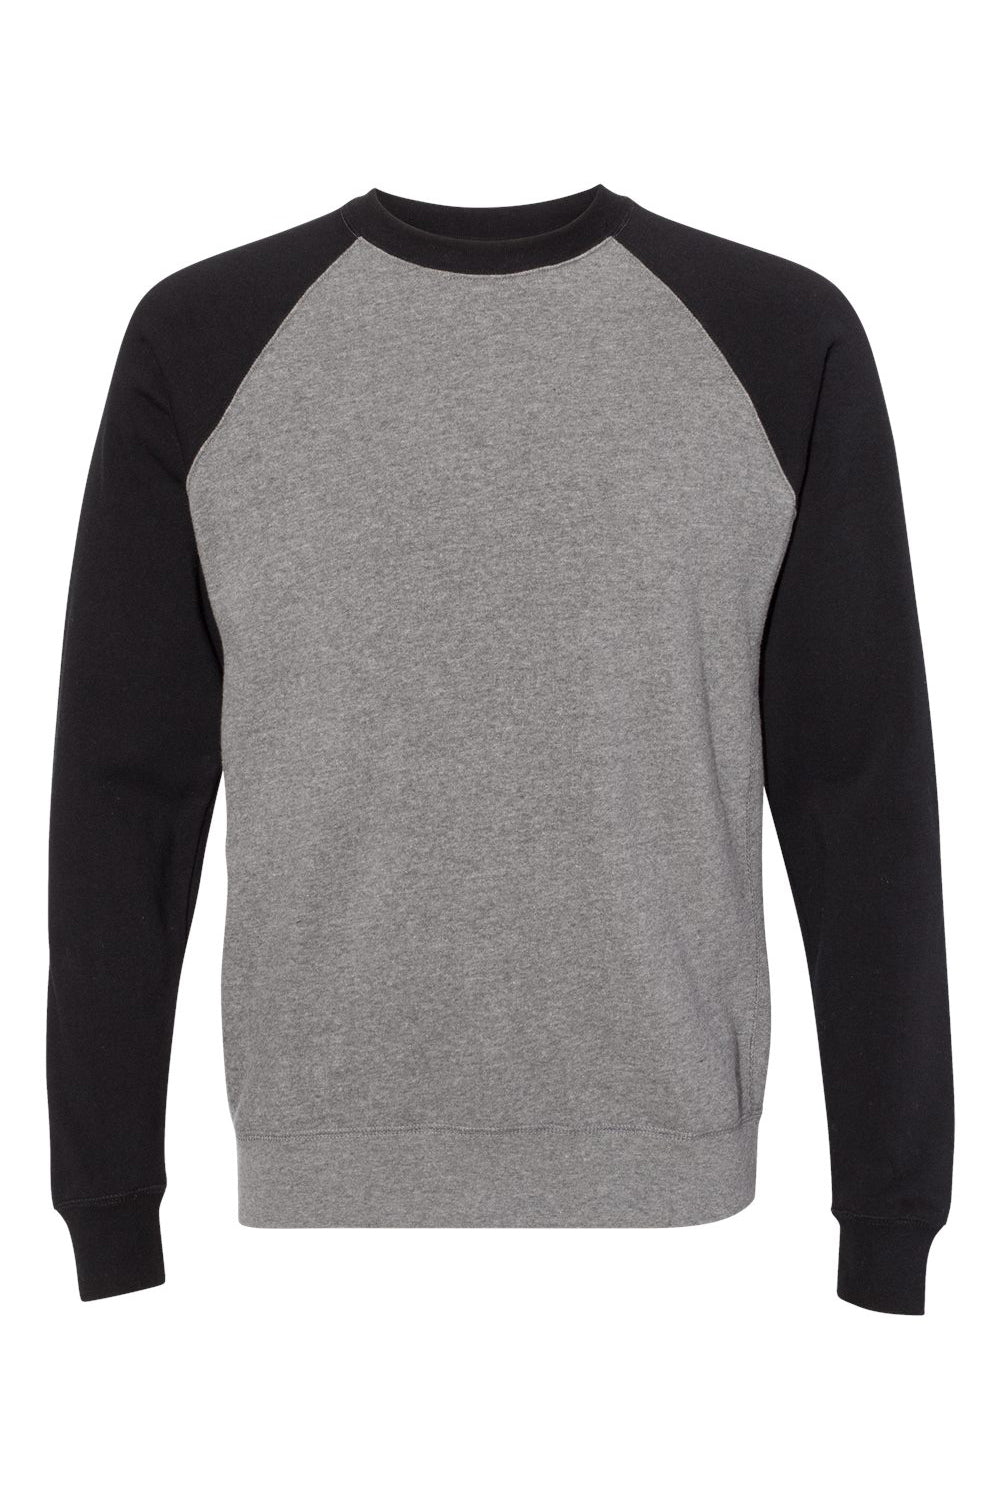 Independent Trading Co. PRM30SBC Mens Special Blend Crewneck Raglan Sweatshirt Heather Nickel Grey/Black Flat Front